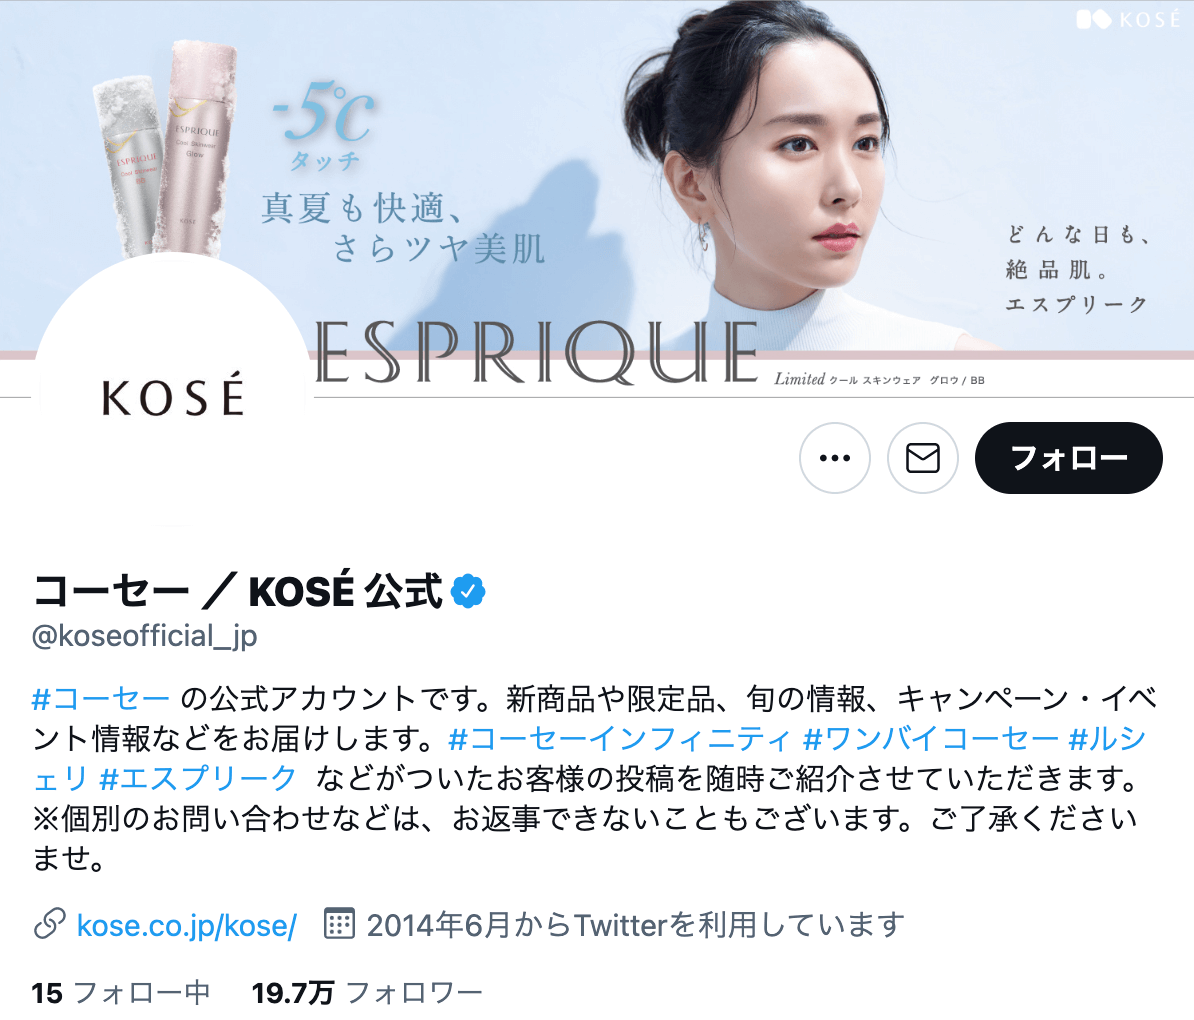 koseofficial_jp-twitter-skincare-4